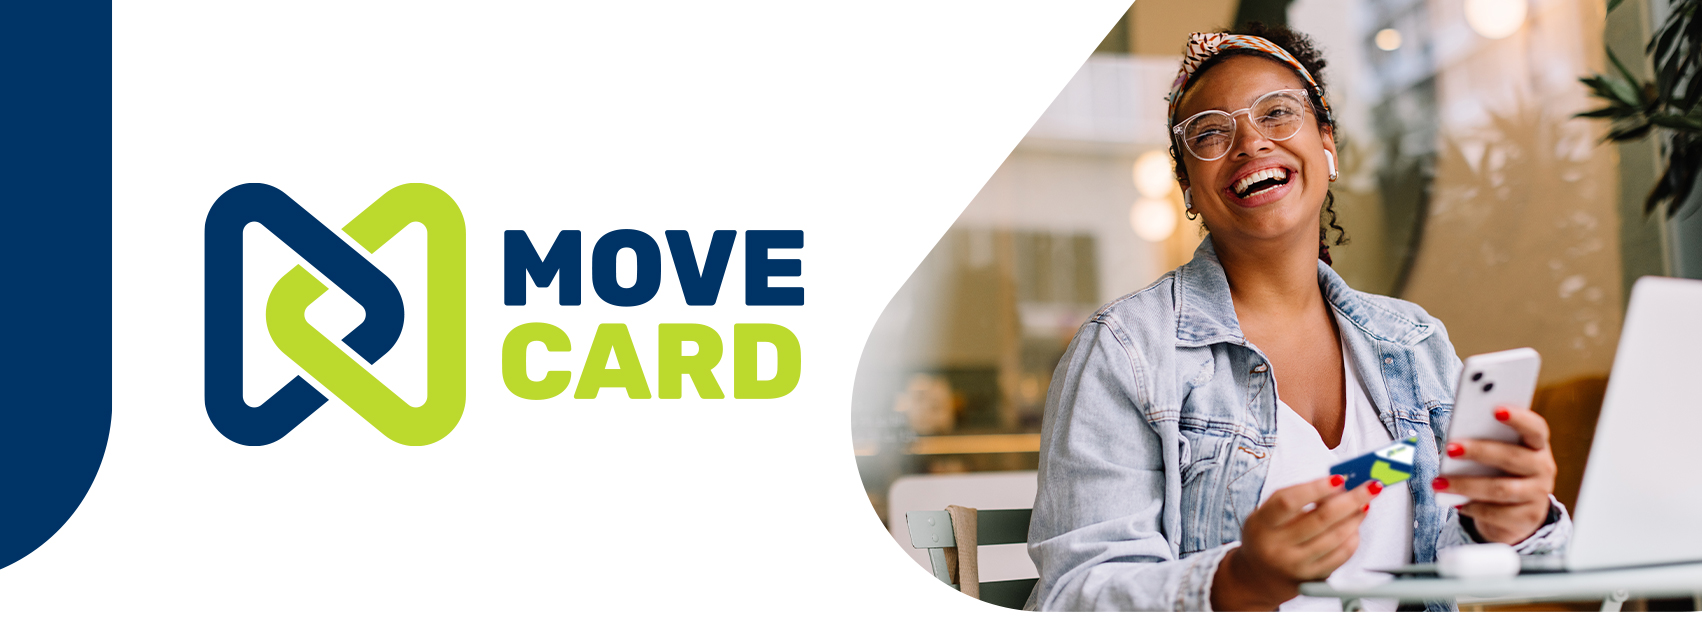 CAPA SITE | Move Card